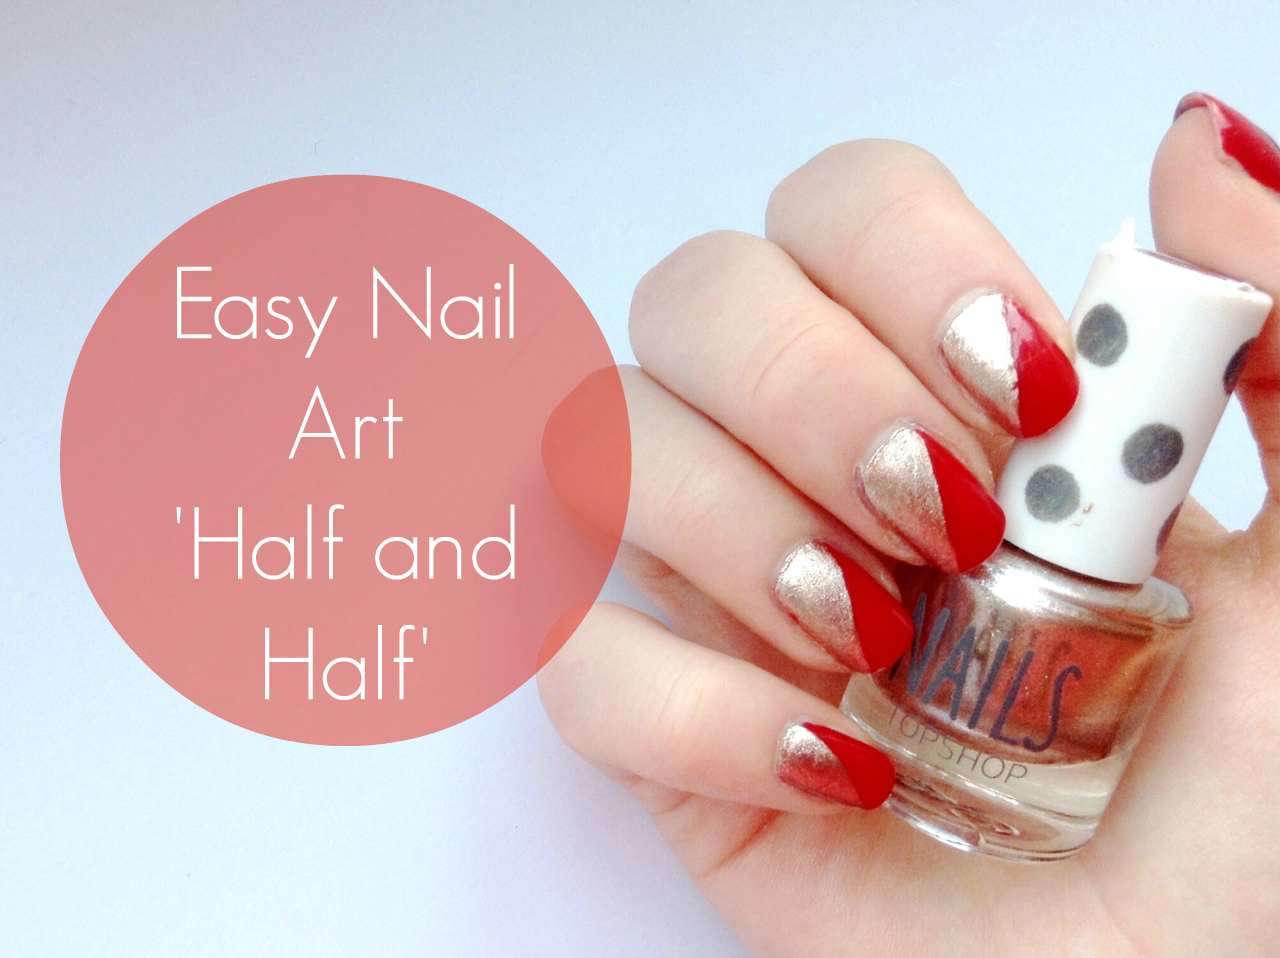 Half and Half Nail Art Designs - wide 8